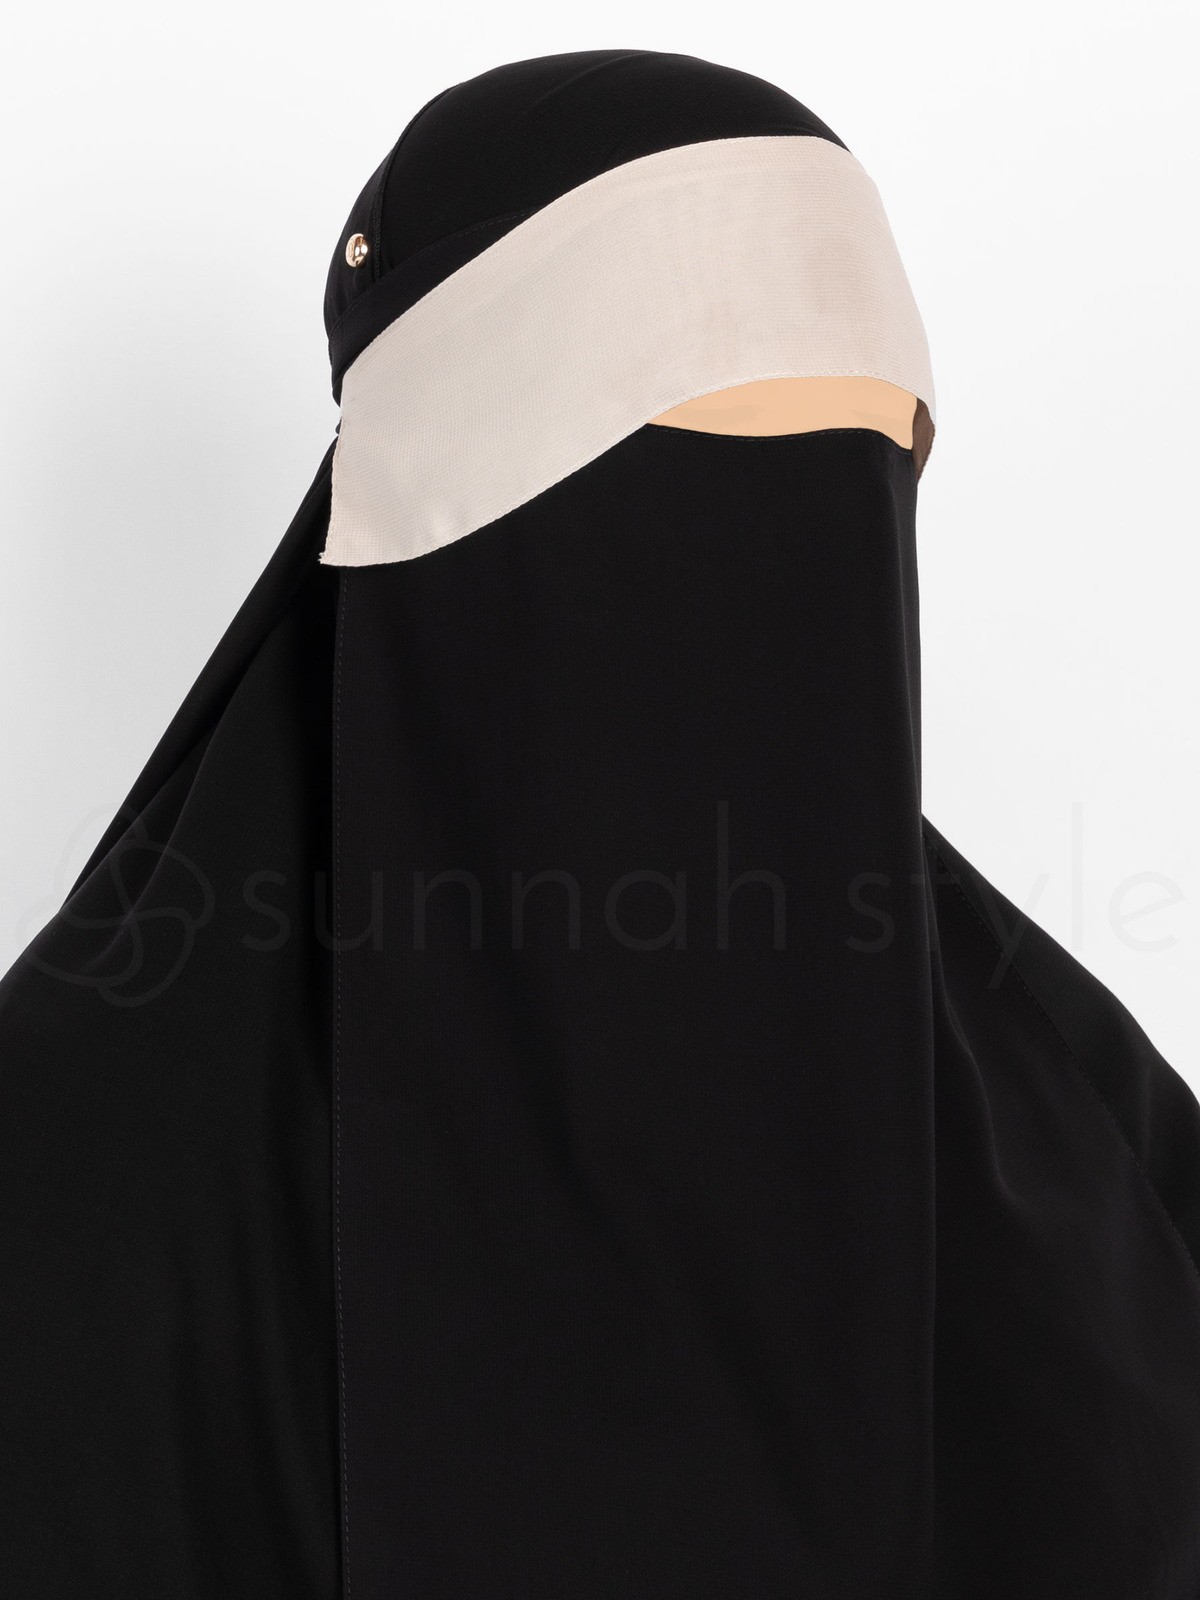 Sunnah Style - Adjustable Niqab Flap (Sahara)